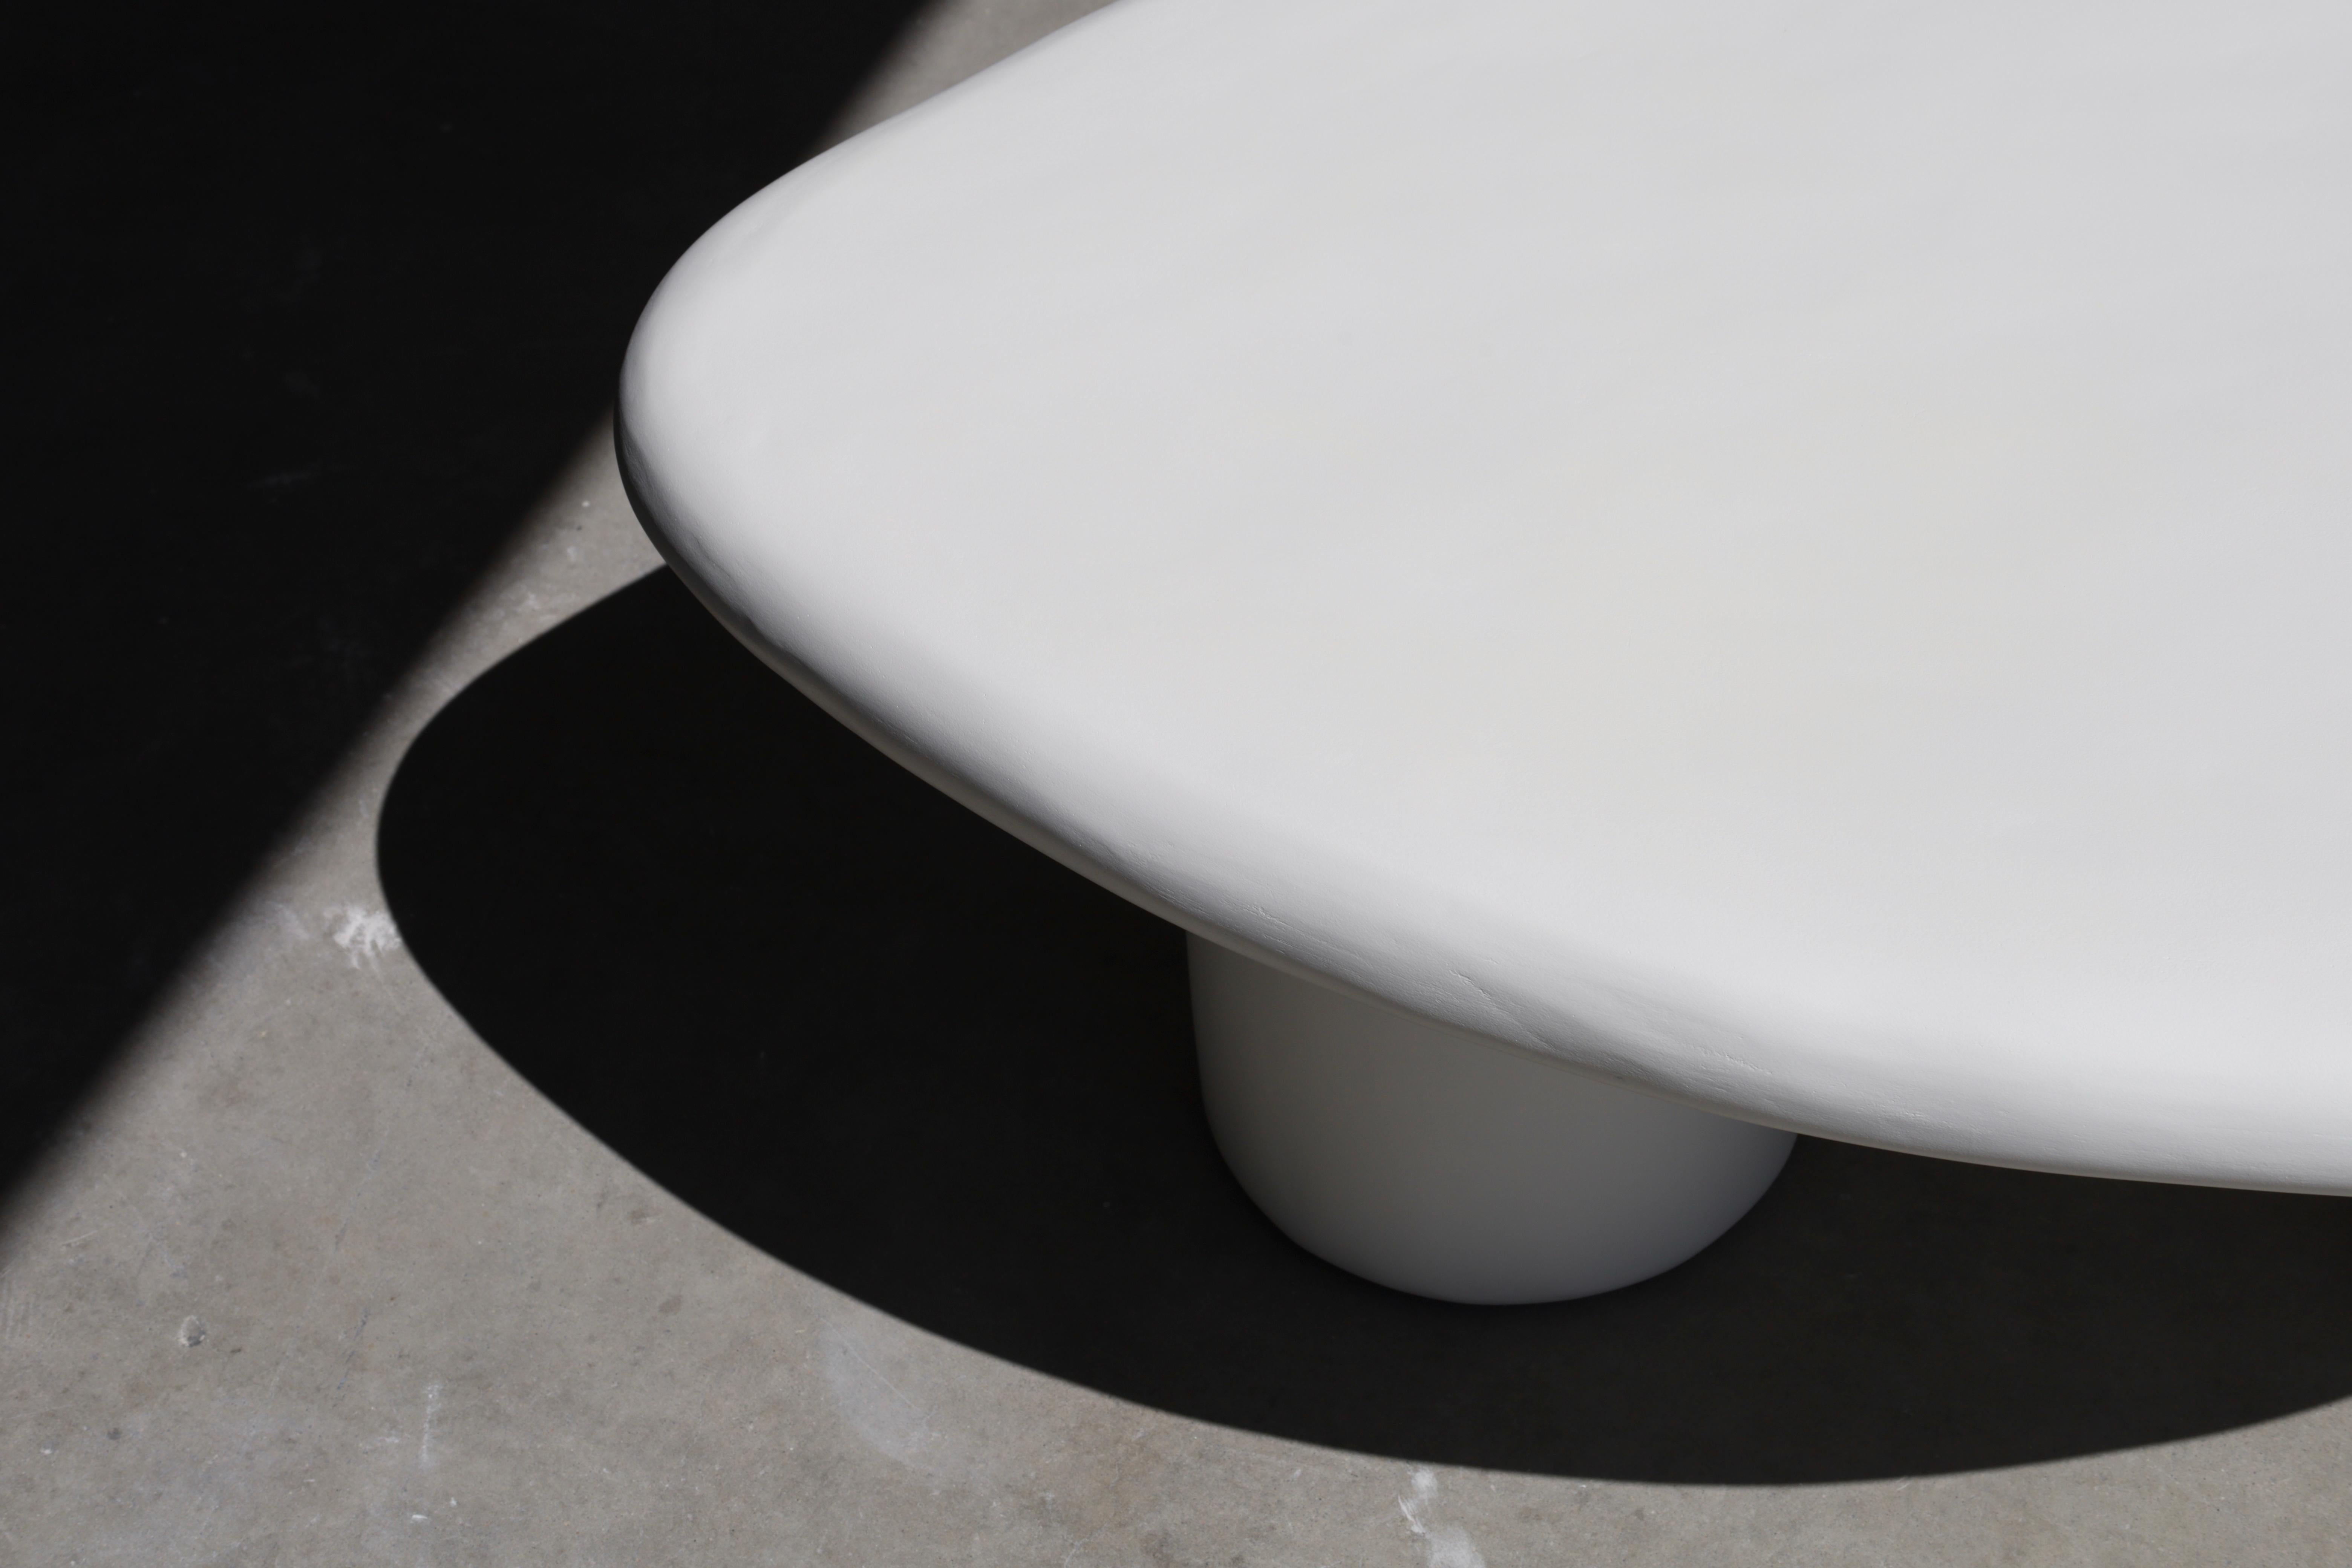 American bondi bohemian plaster coffee table by öken house studios